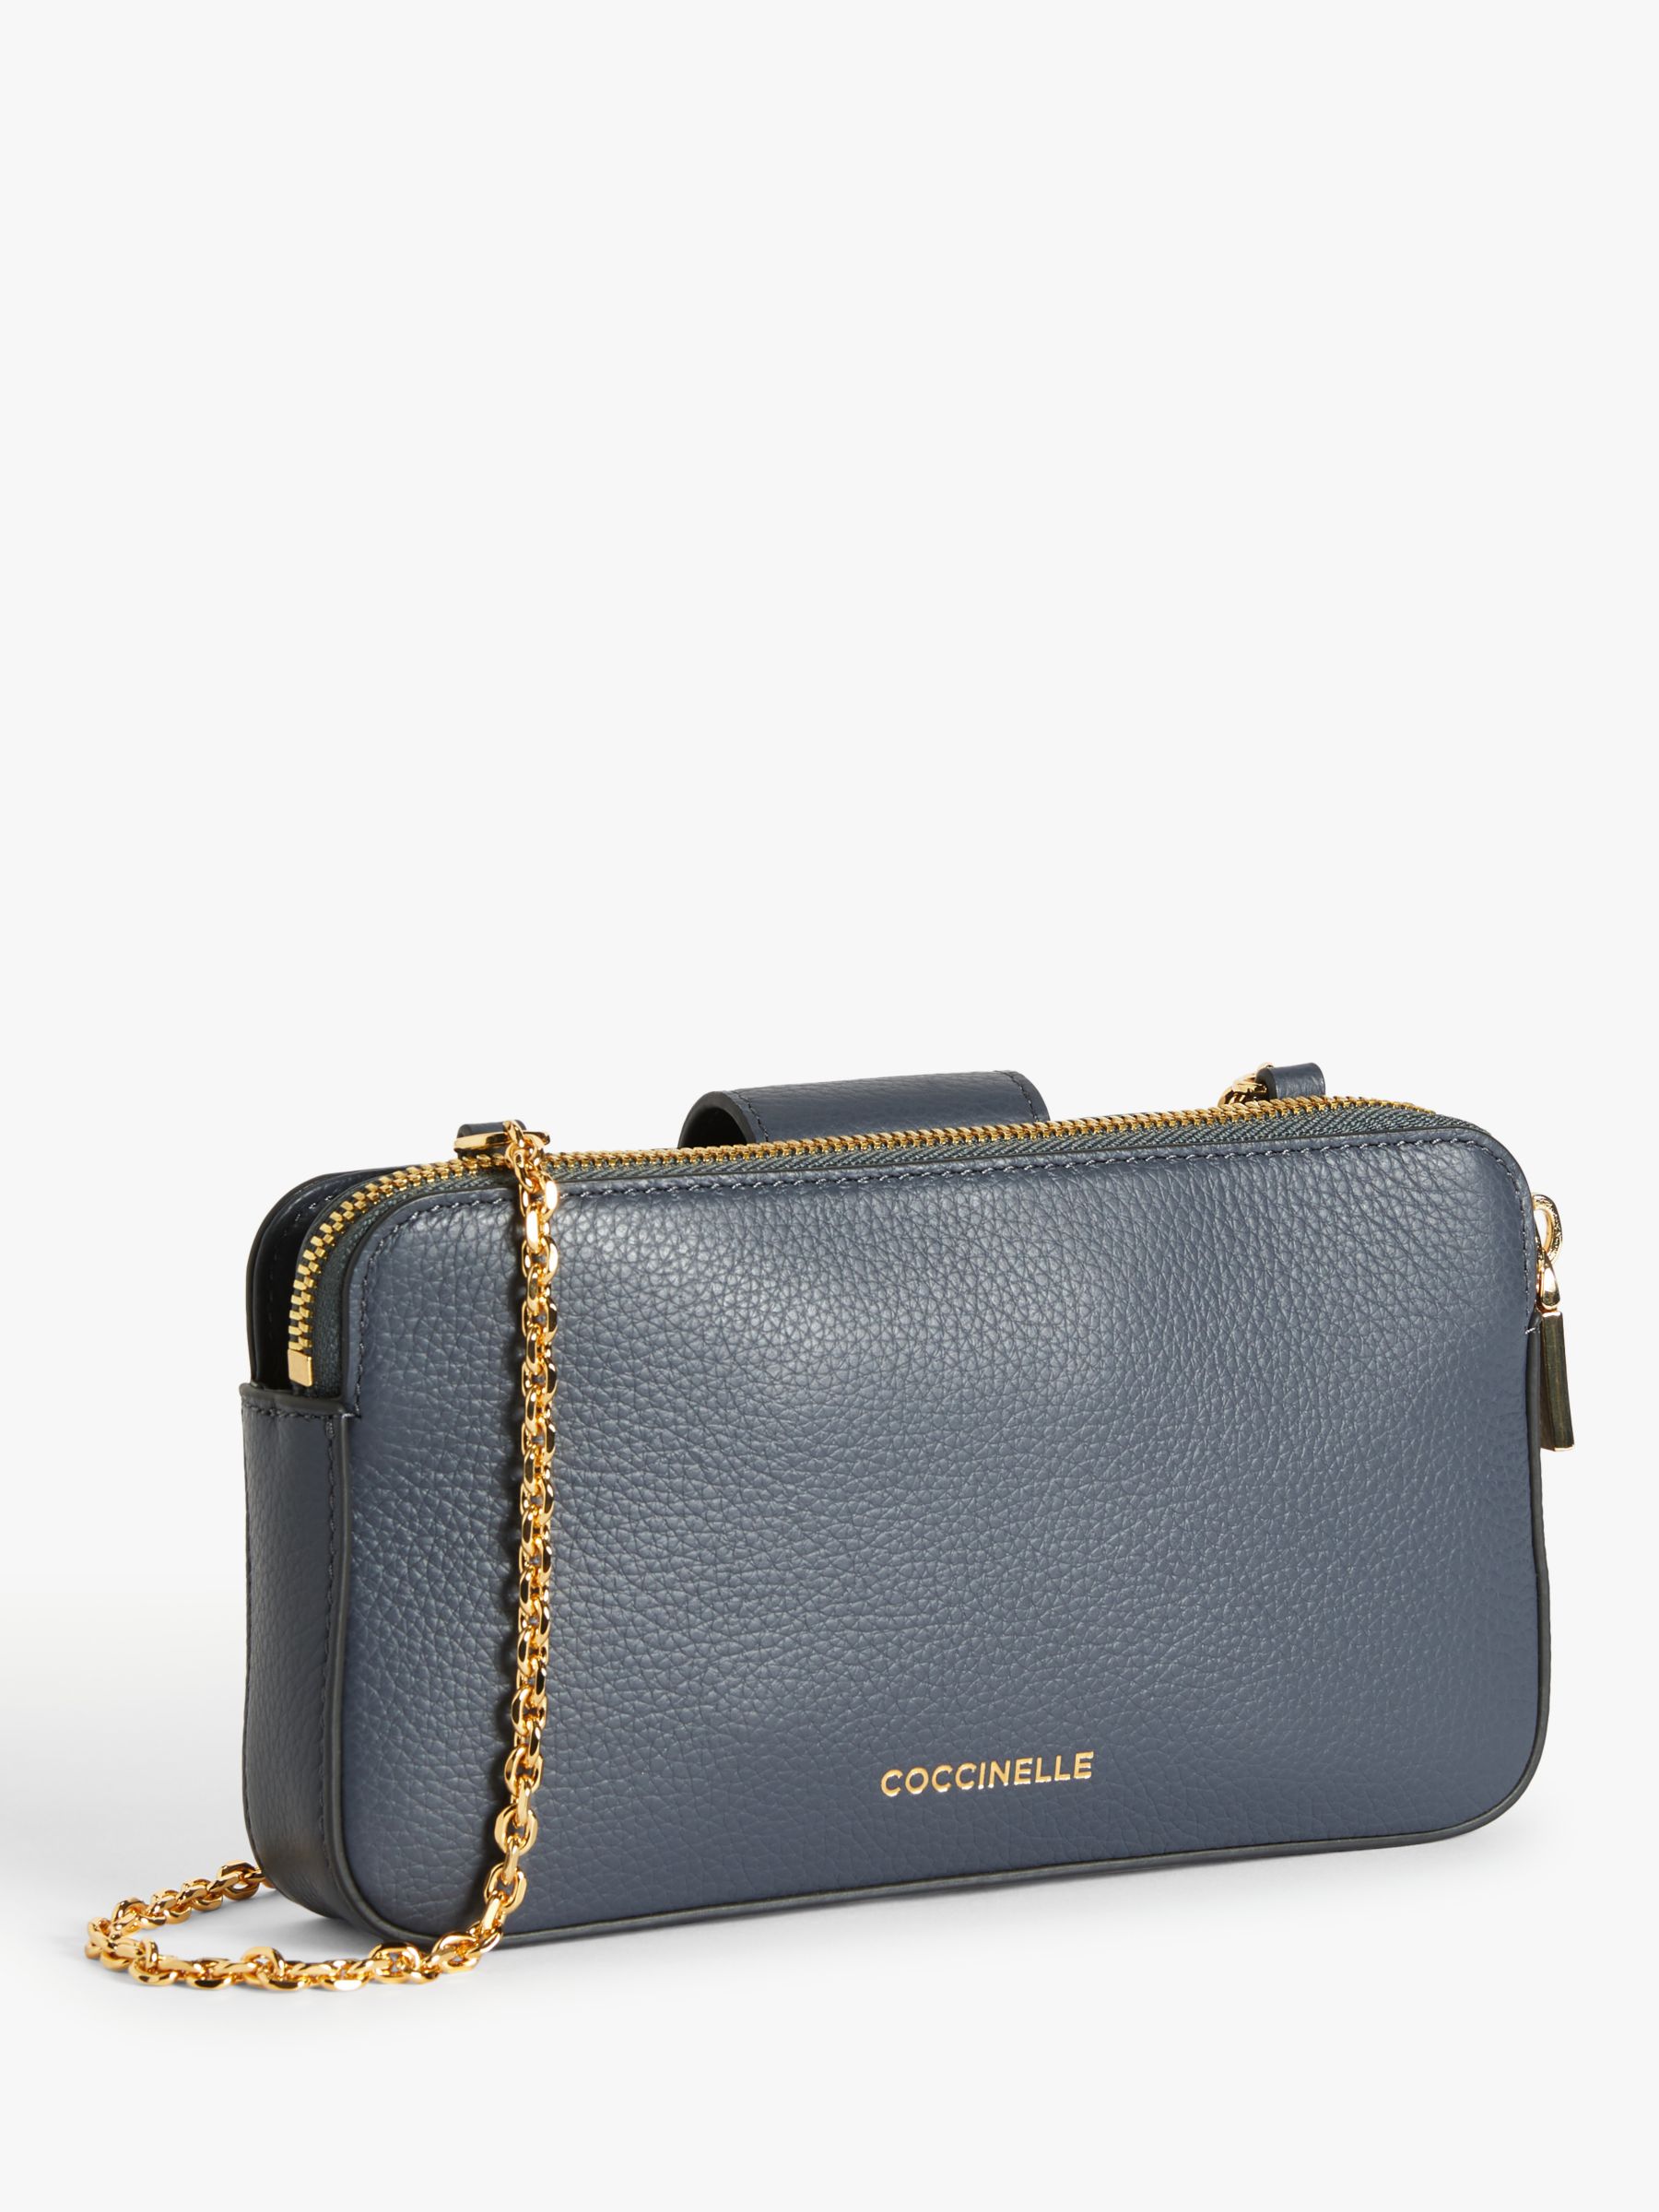 Coccinelle Fedra Leather Mini Bag